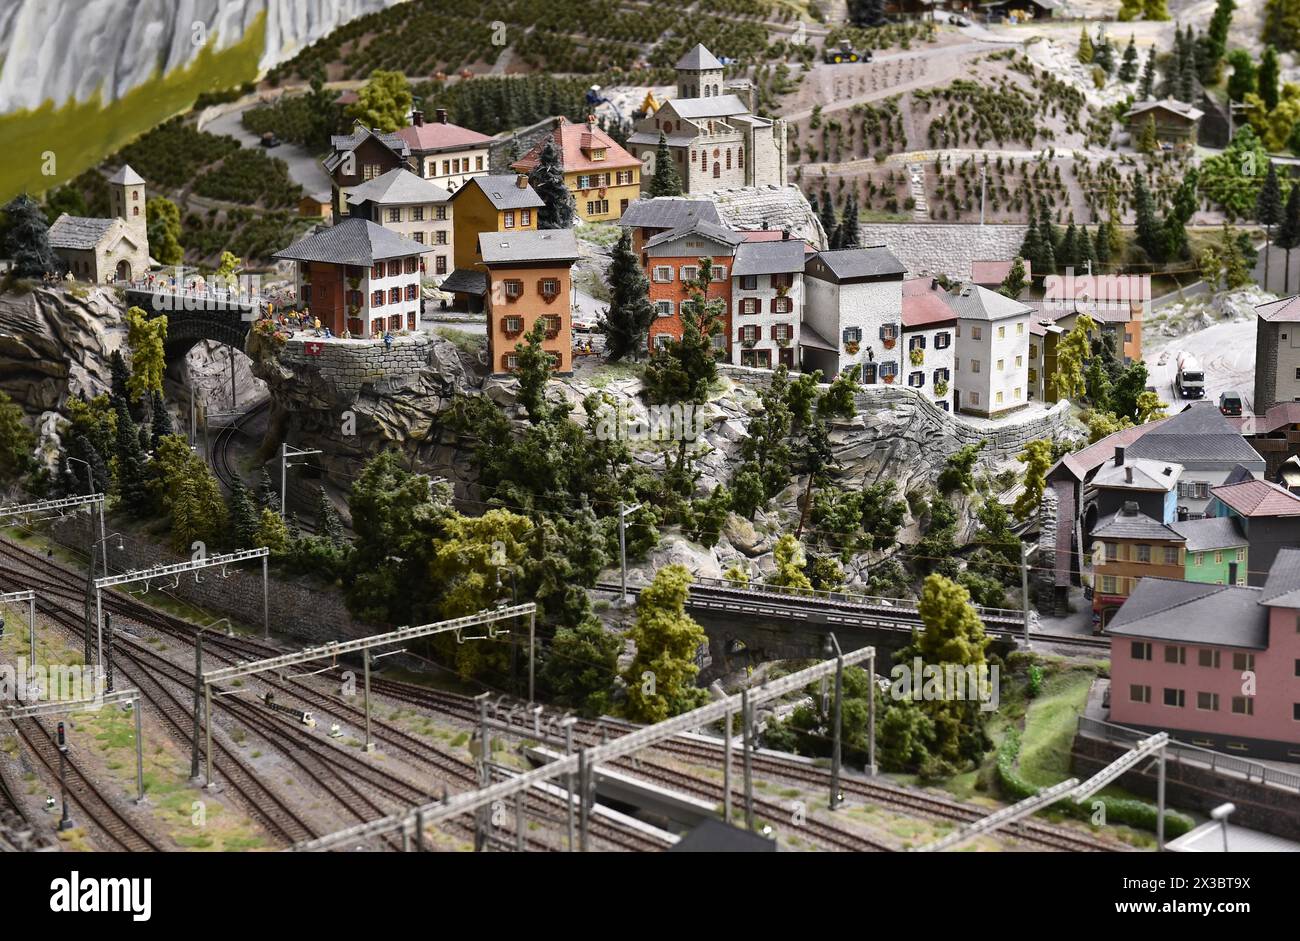 Railway landscape in Miniatur Wunderland Hamburg, Germany Stock Photo